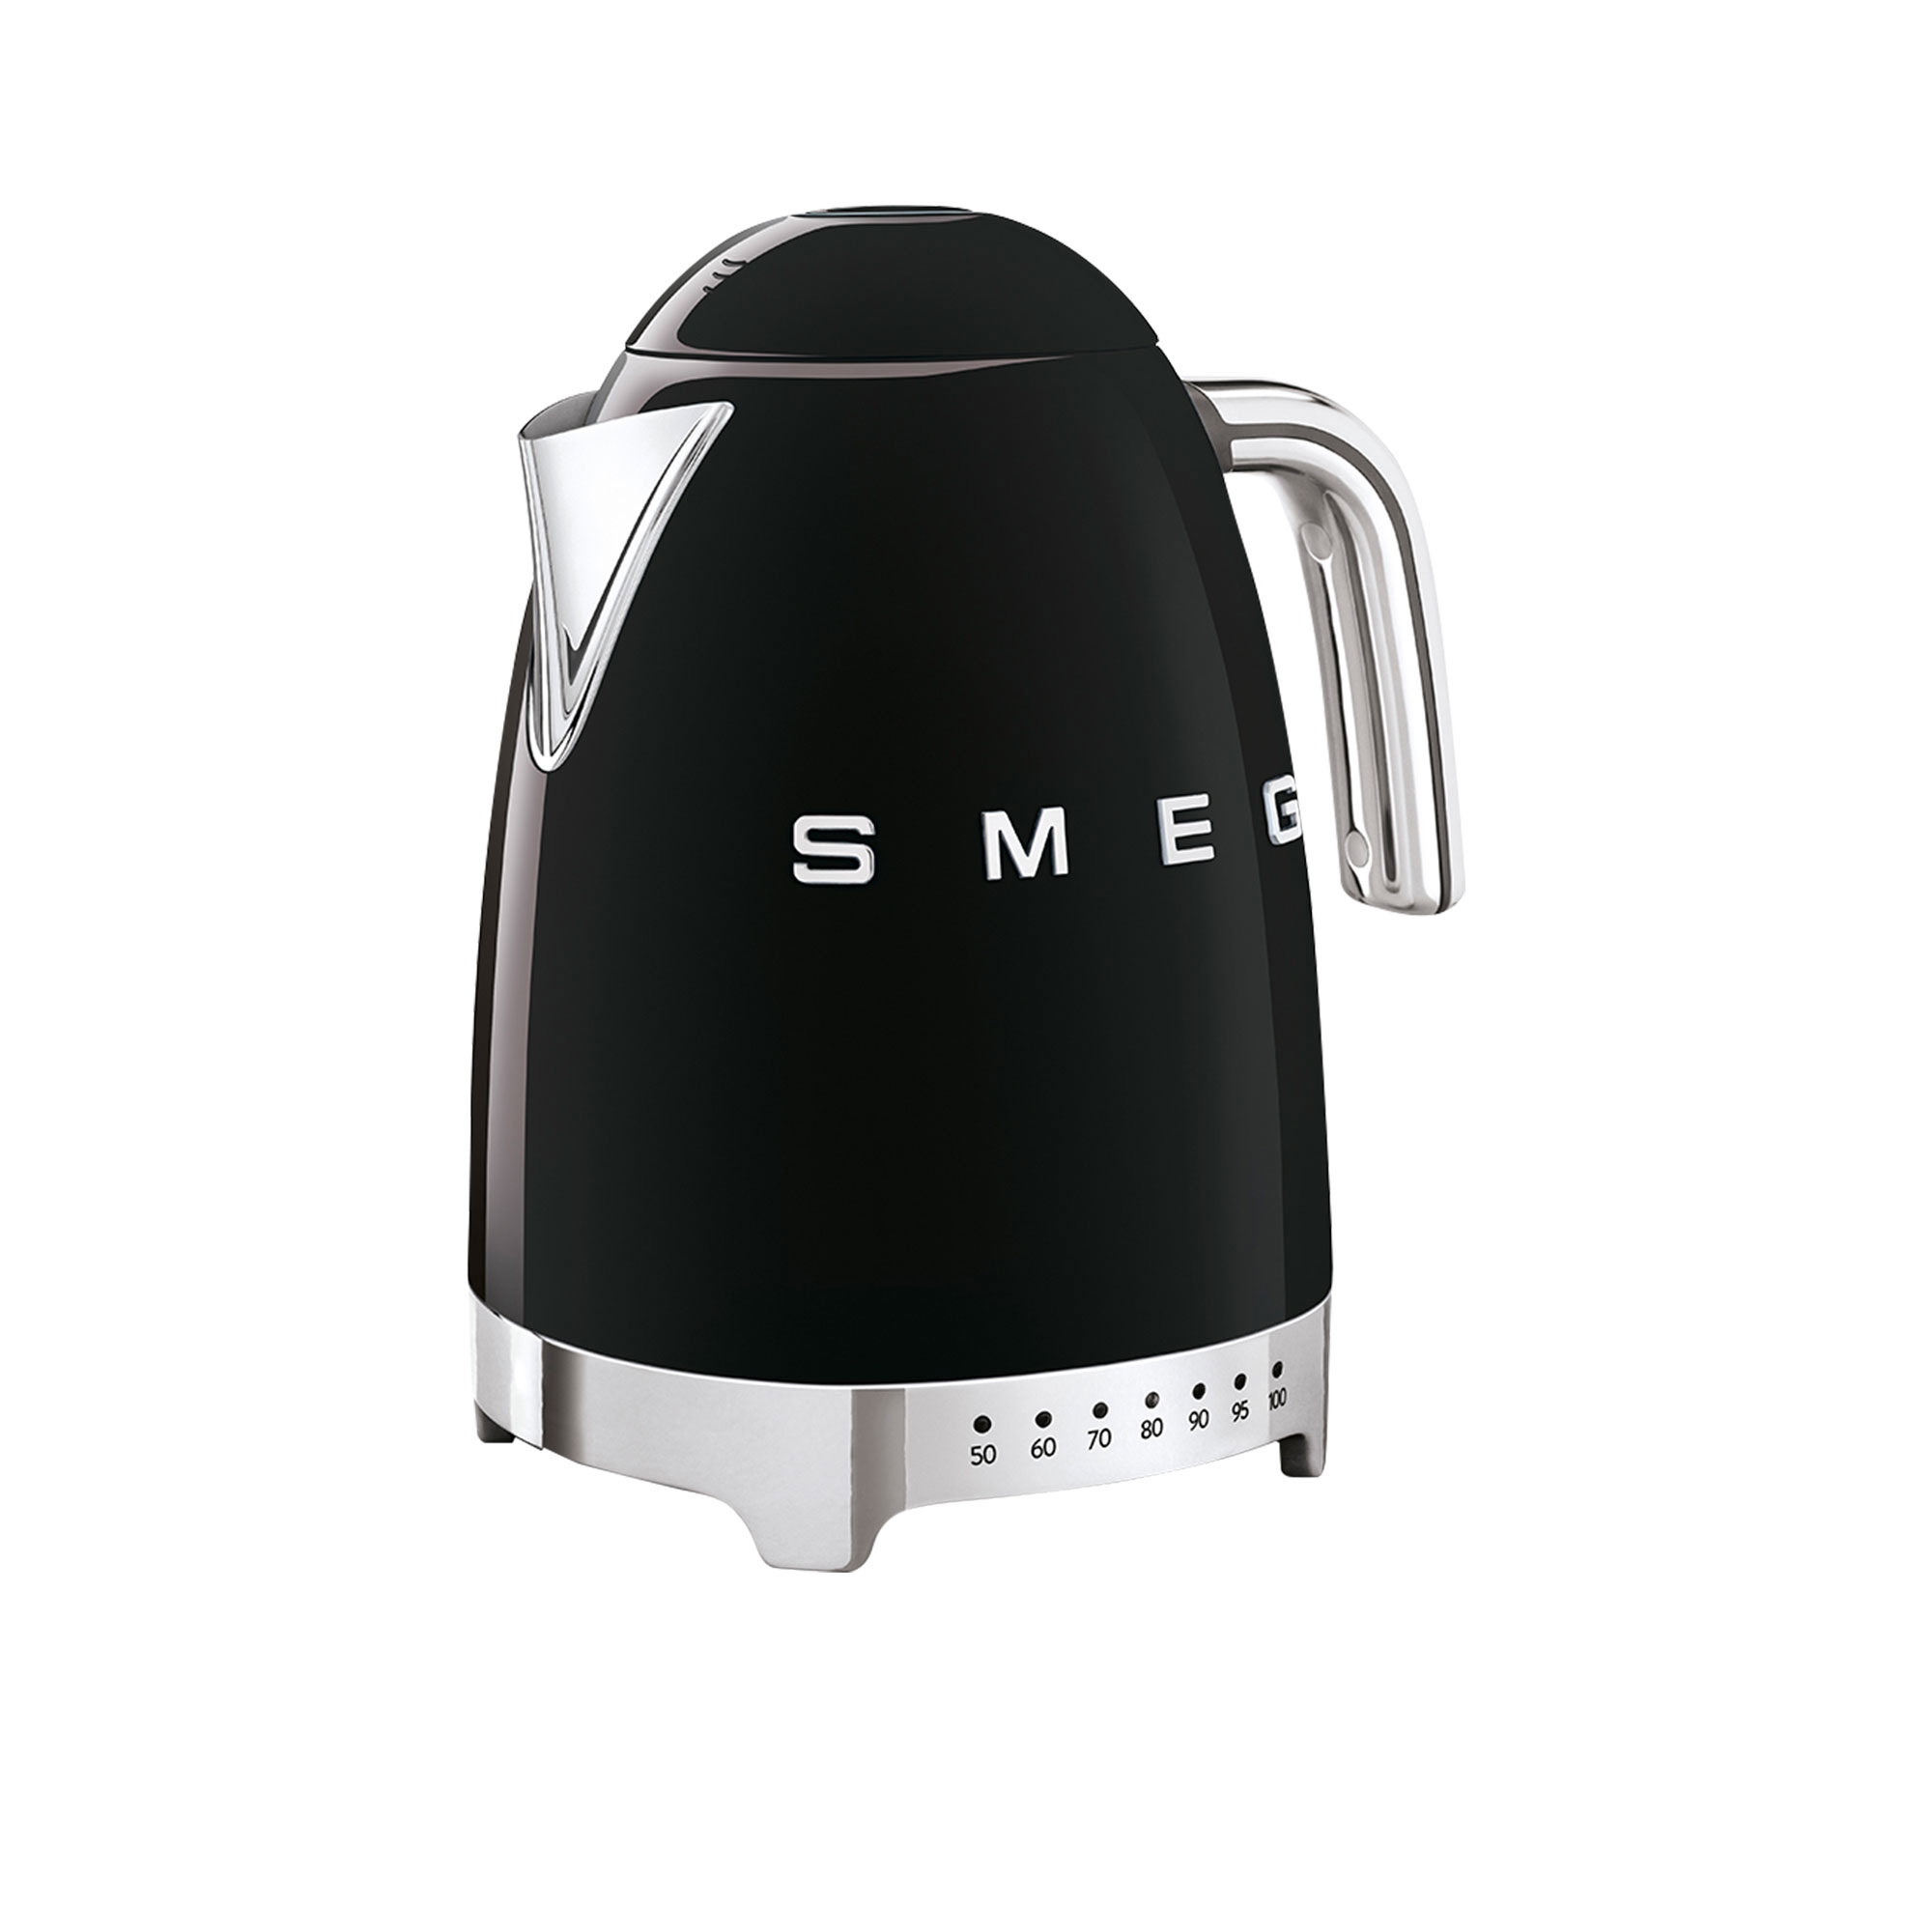 Smeg 50's Retro Style Variable Temperature Kettle 1.7L Black Image 2